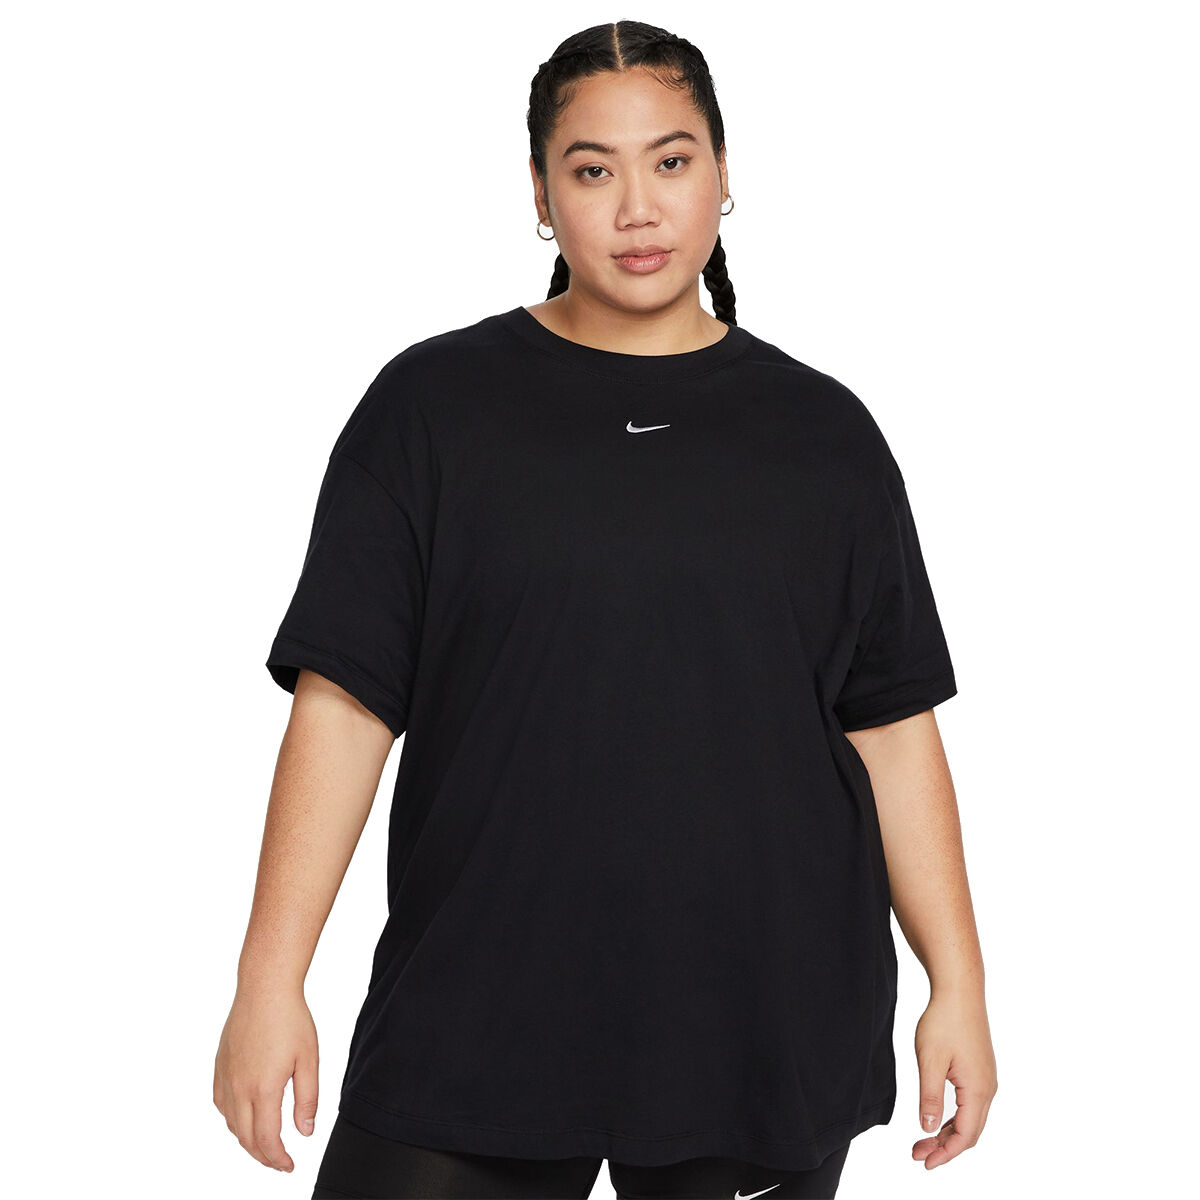 Nike Womens Sportswear Essential Tee (Plus Size), , rebel_hi-res